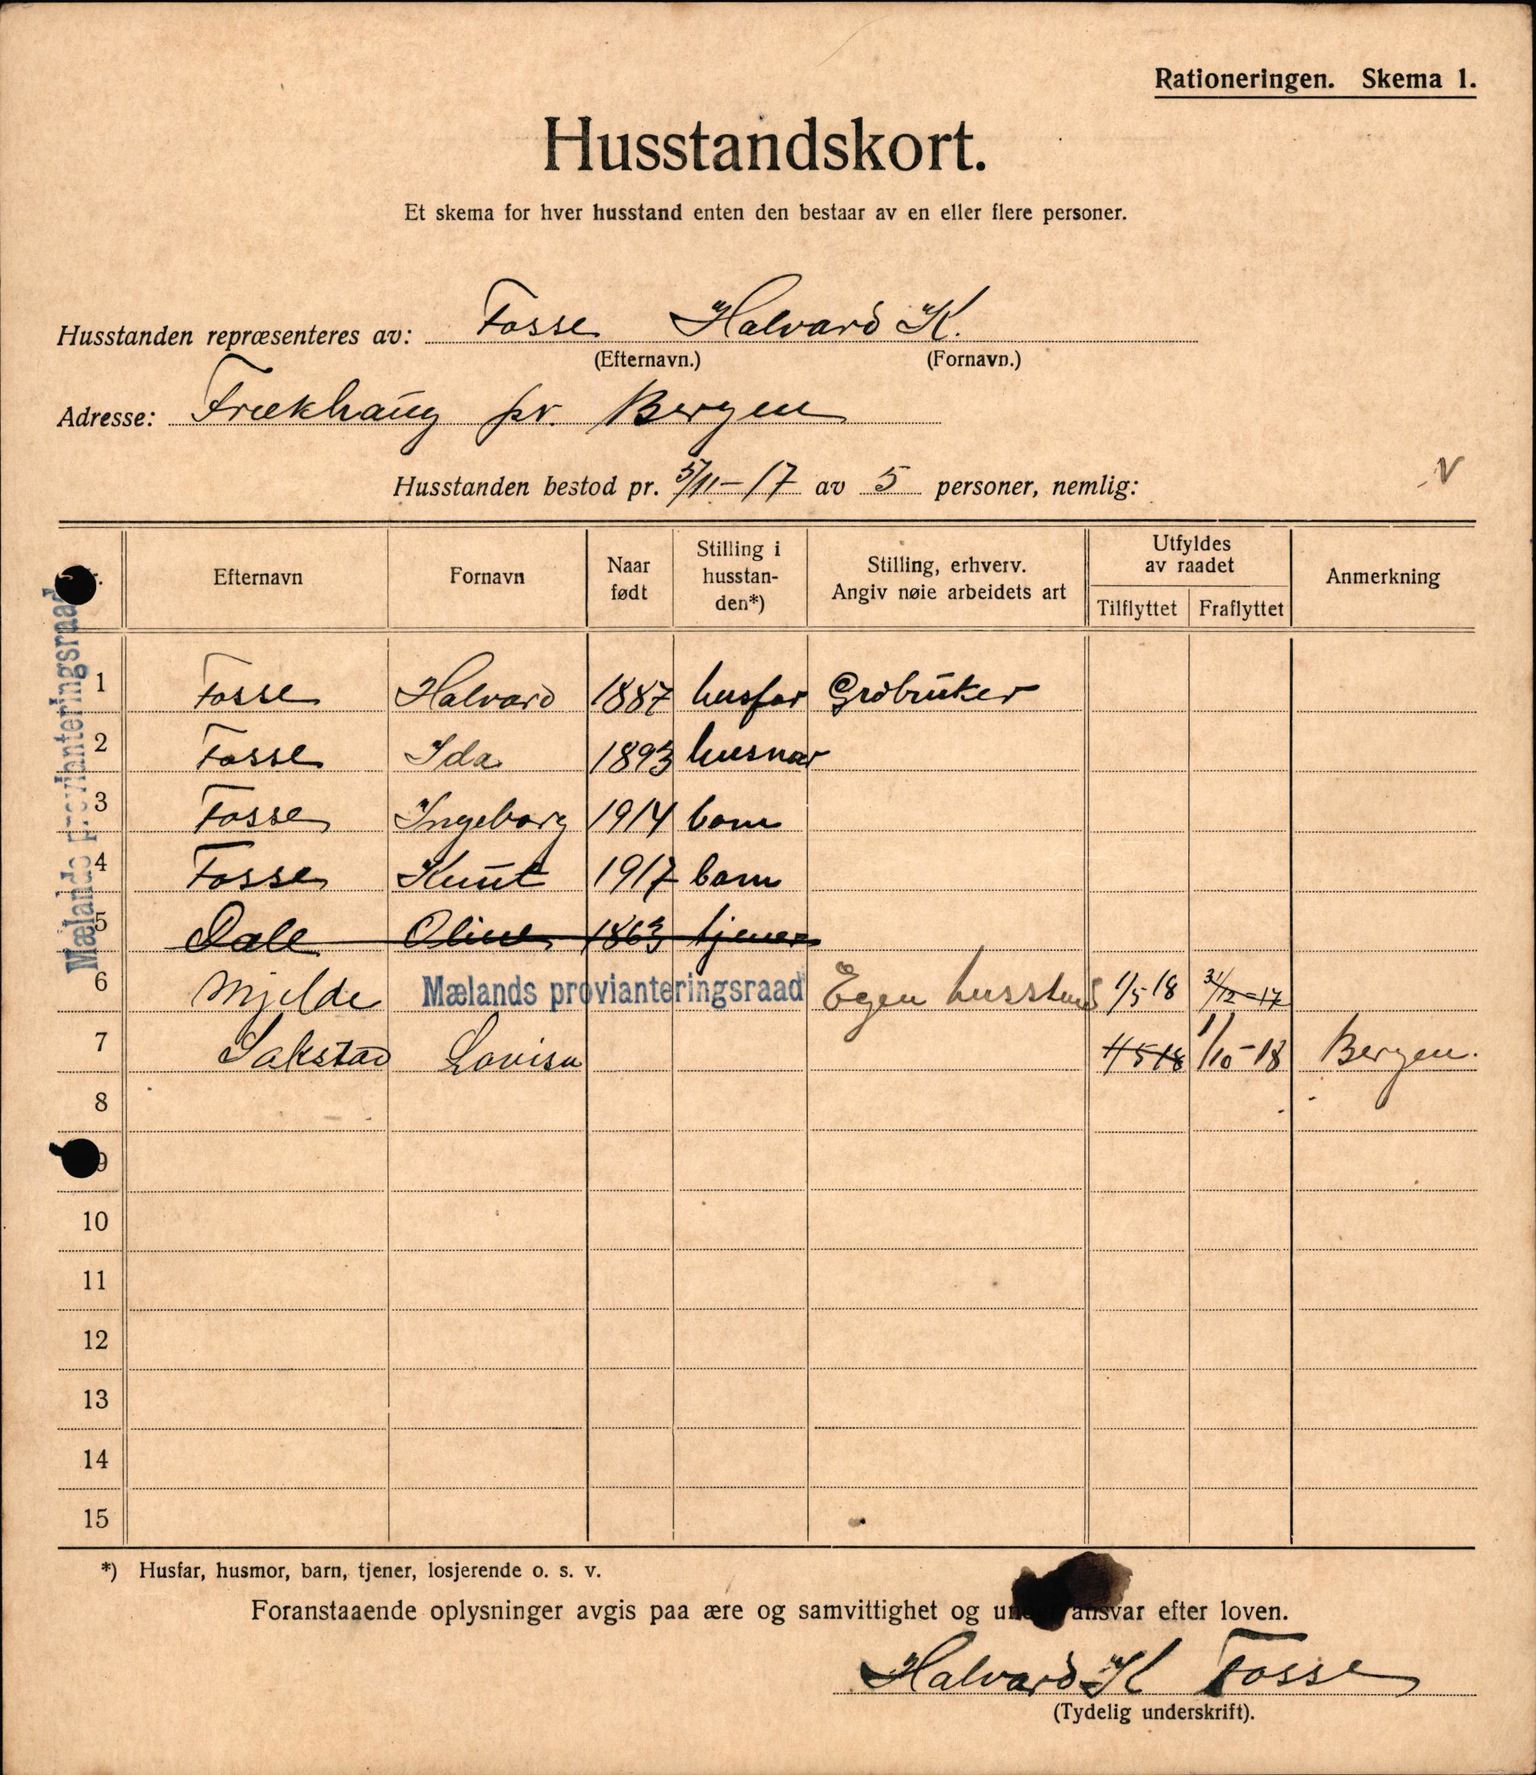 IKAH, Meland kommune, Provianteringsrådet, Husstander per 01.11.1917, 1917-1918, s. 223